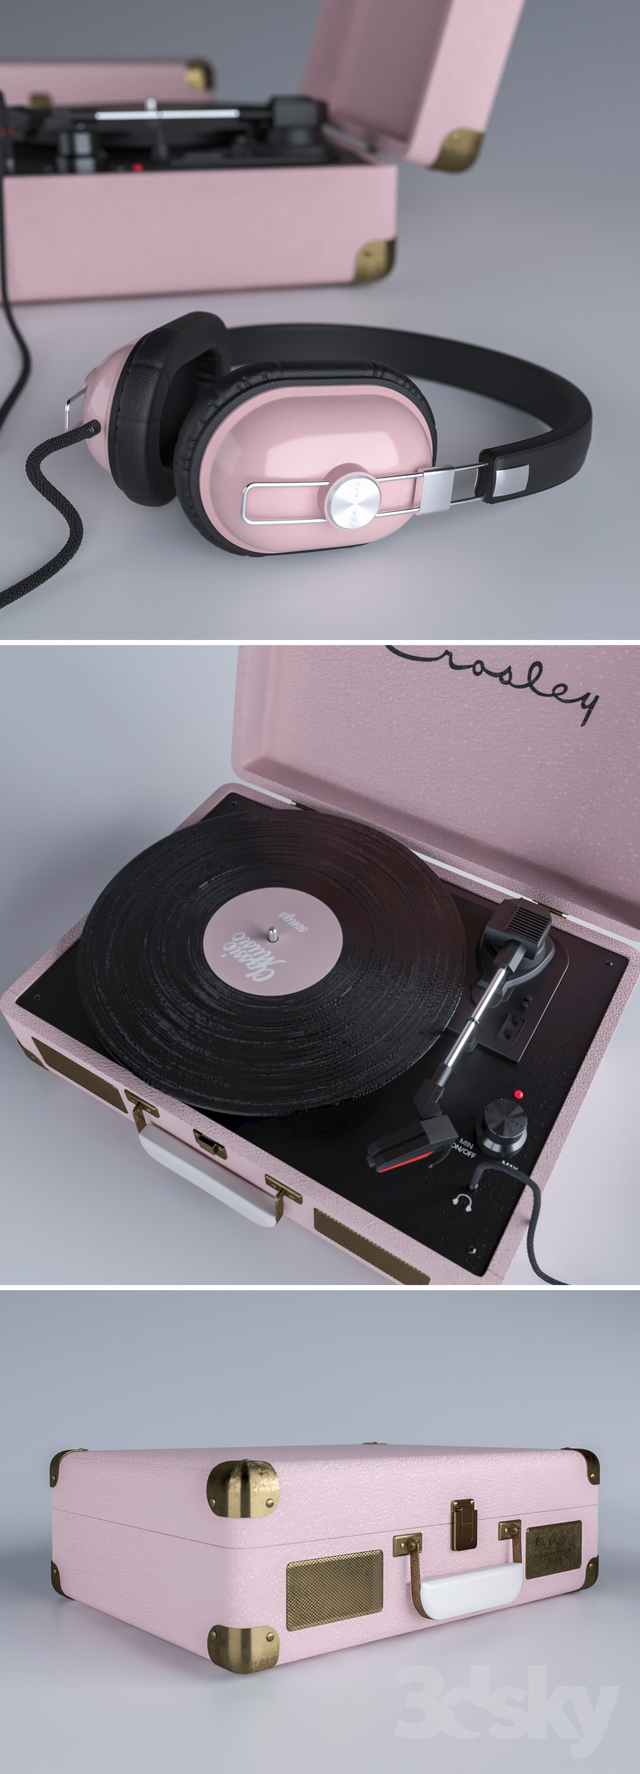 Crosley Vinyl Player